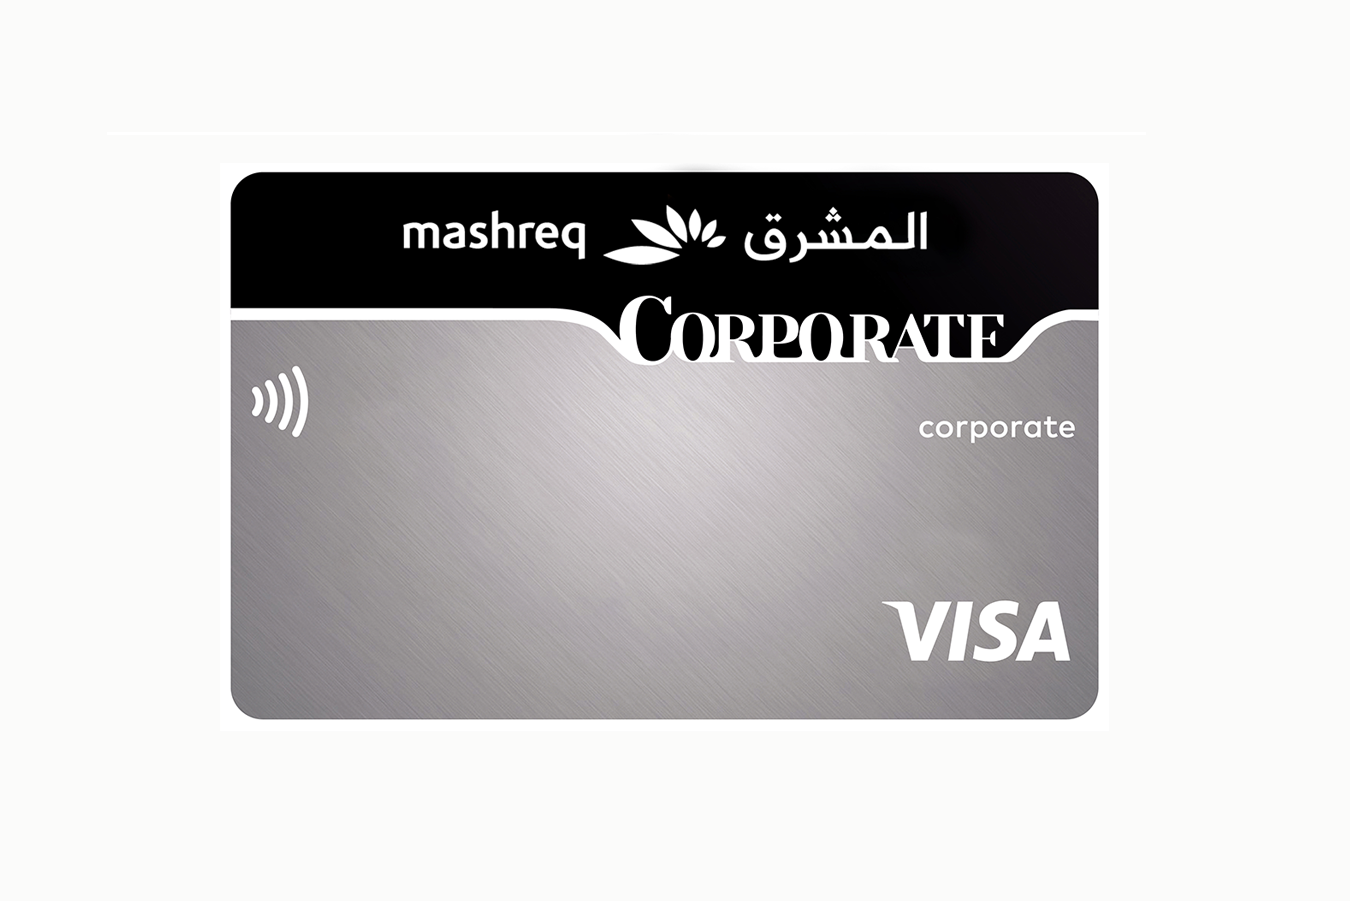 mashreq credit card travel insurance